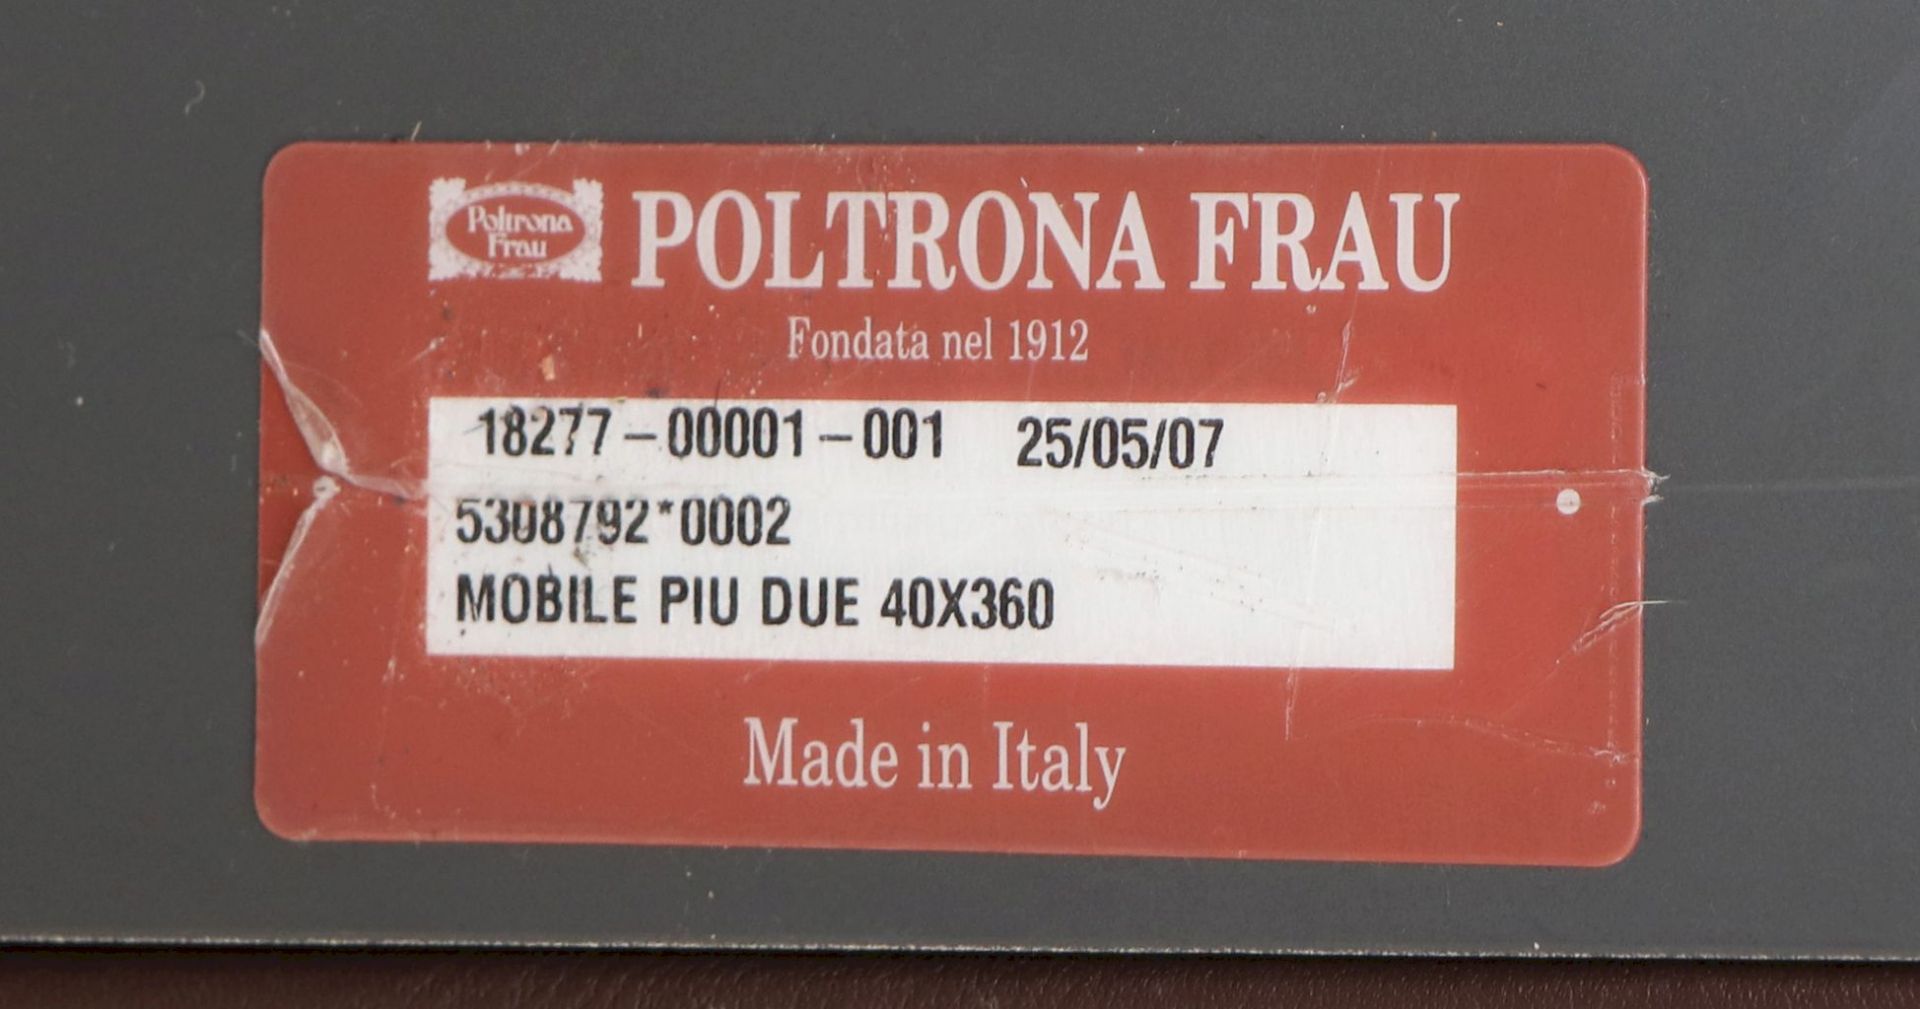 POLTRONA FRAU ITALIA Sideboard - Image 4 of 4